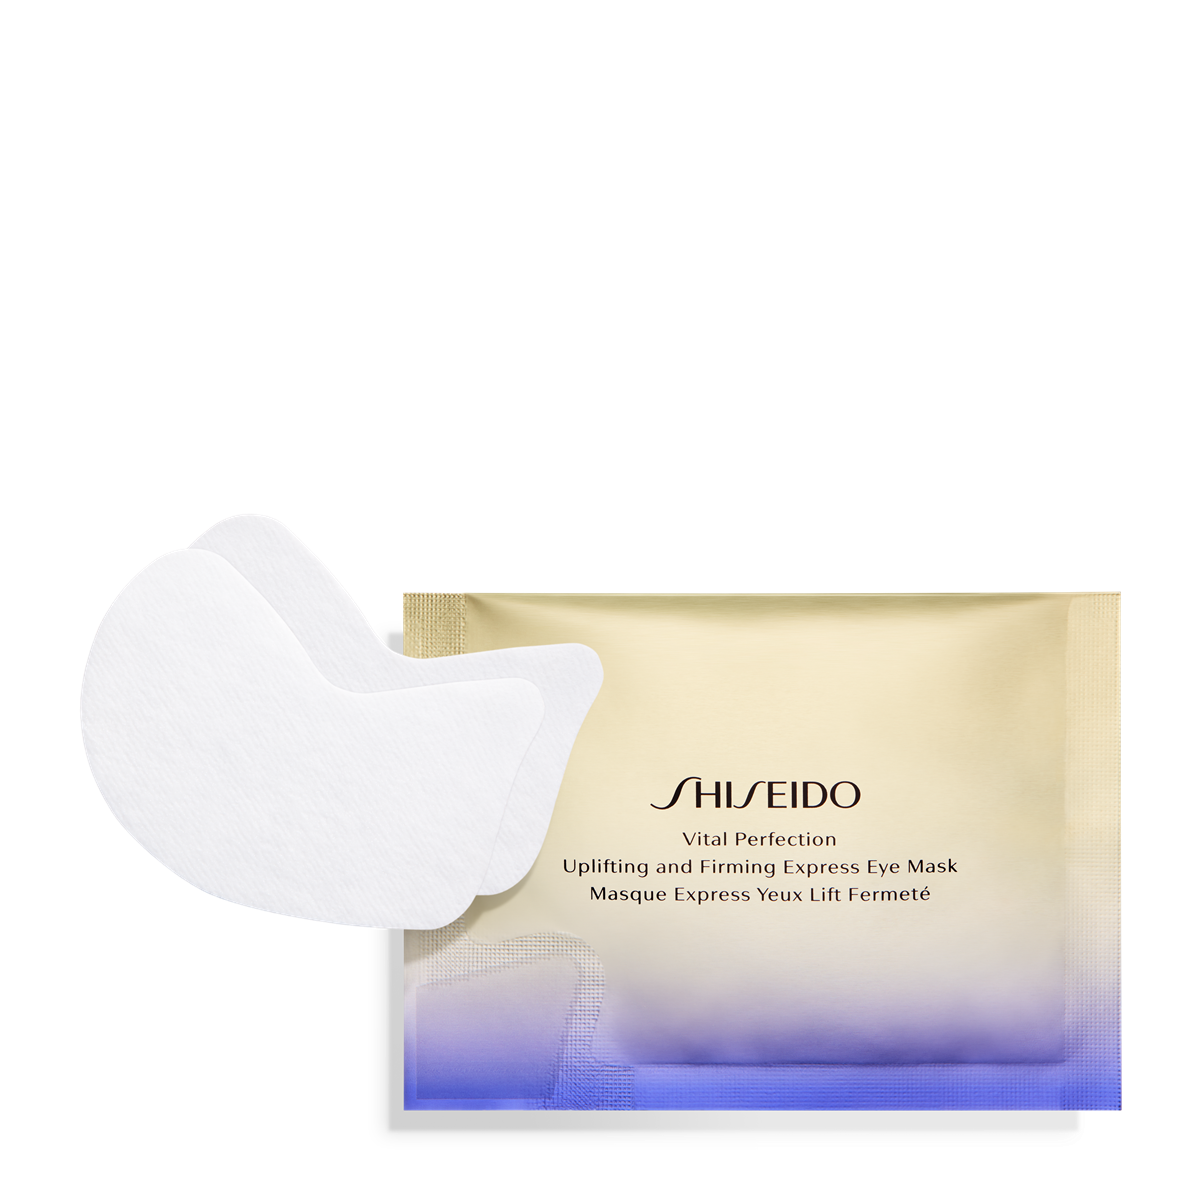 去眼紋眼袋推介：Shiseido Vital Perfection Uplifting and Firming Express Eye Mask 賦活瞬效提拉眼膜 $580/12對